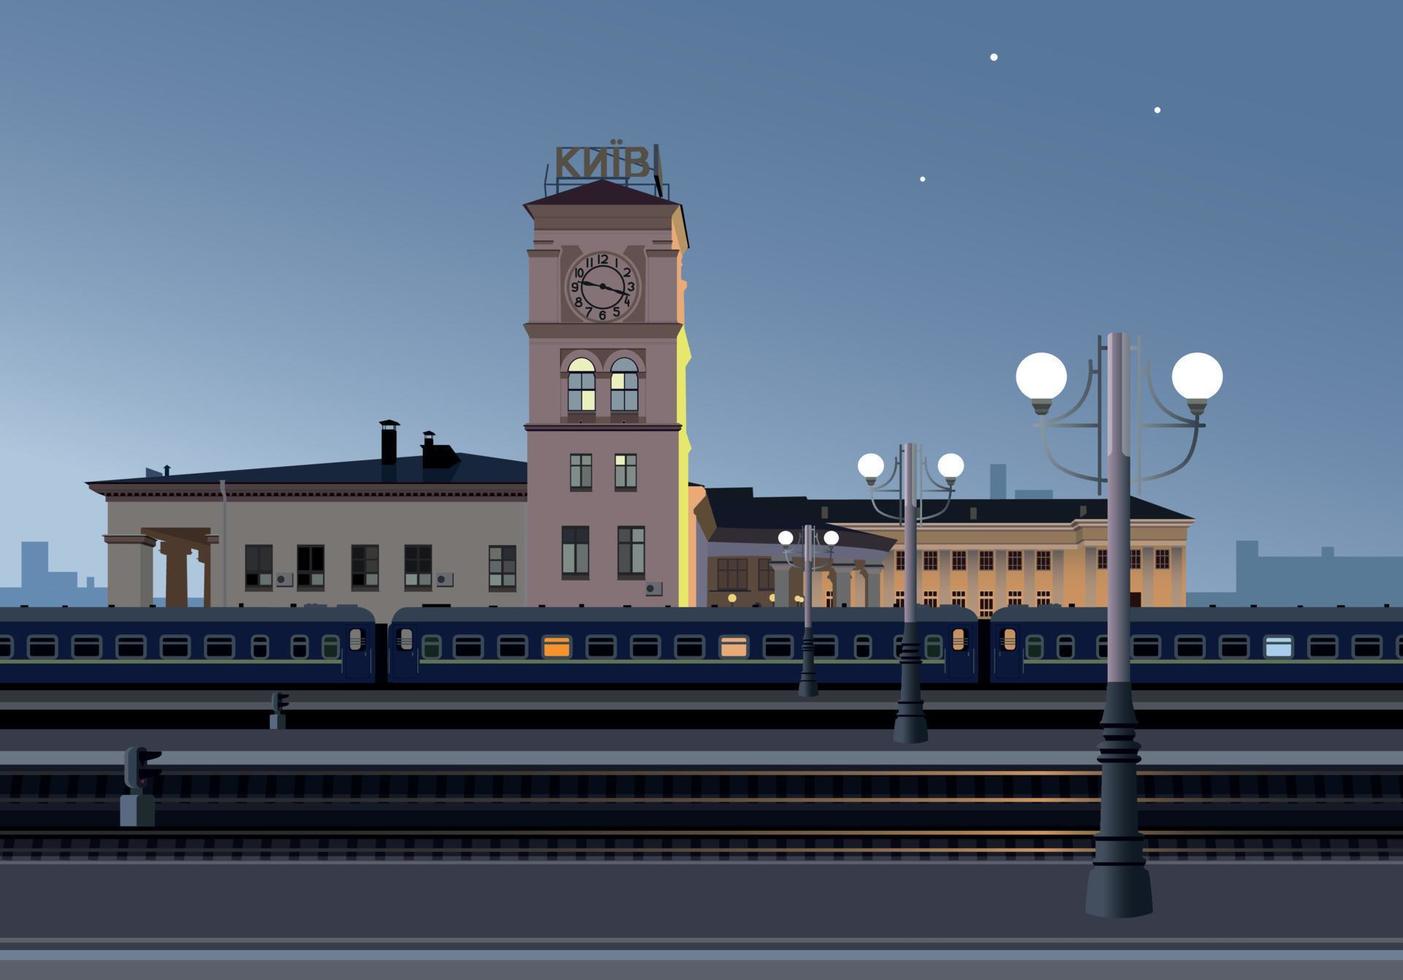 kievski spoorweg station, avond trein. vector. vector